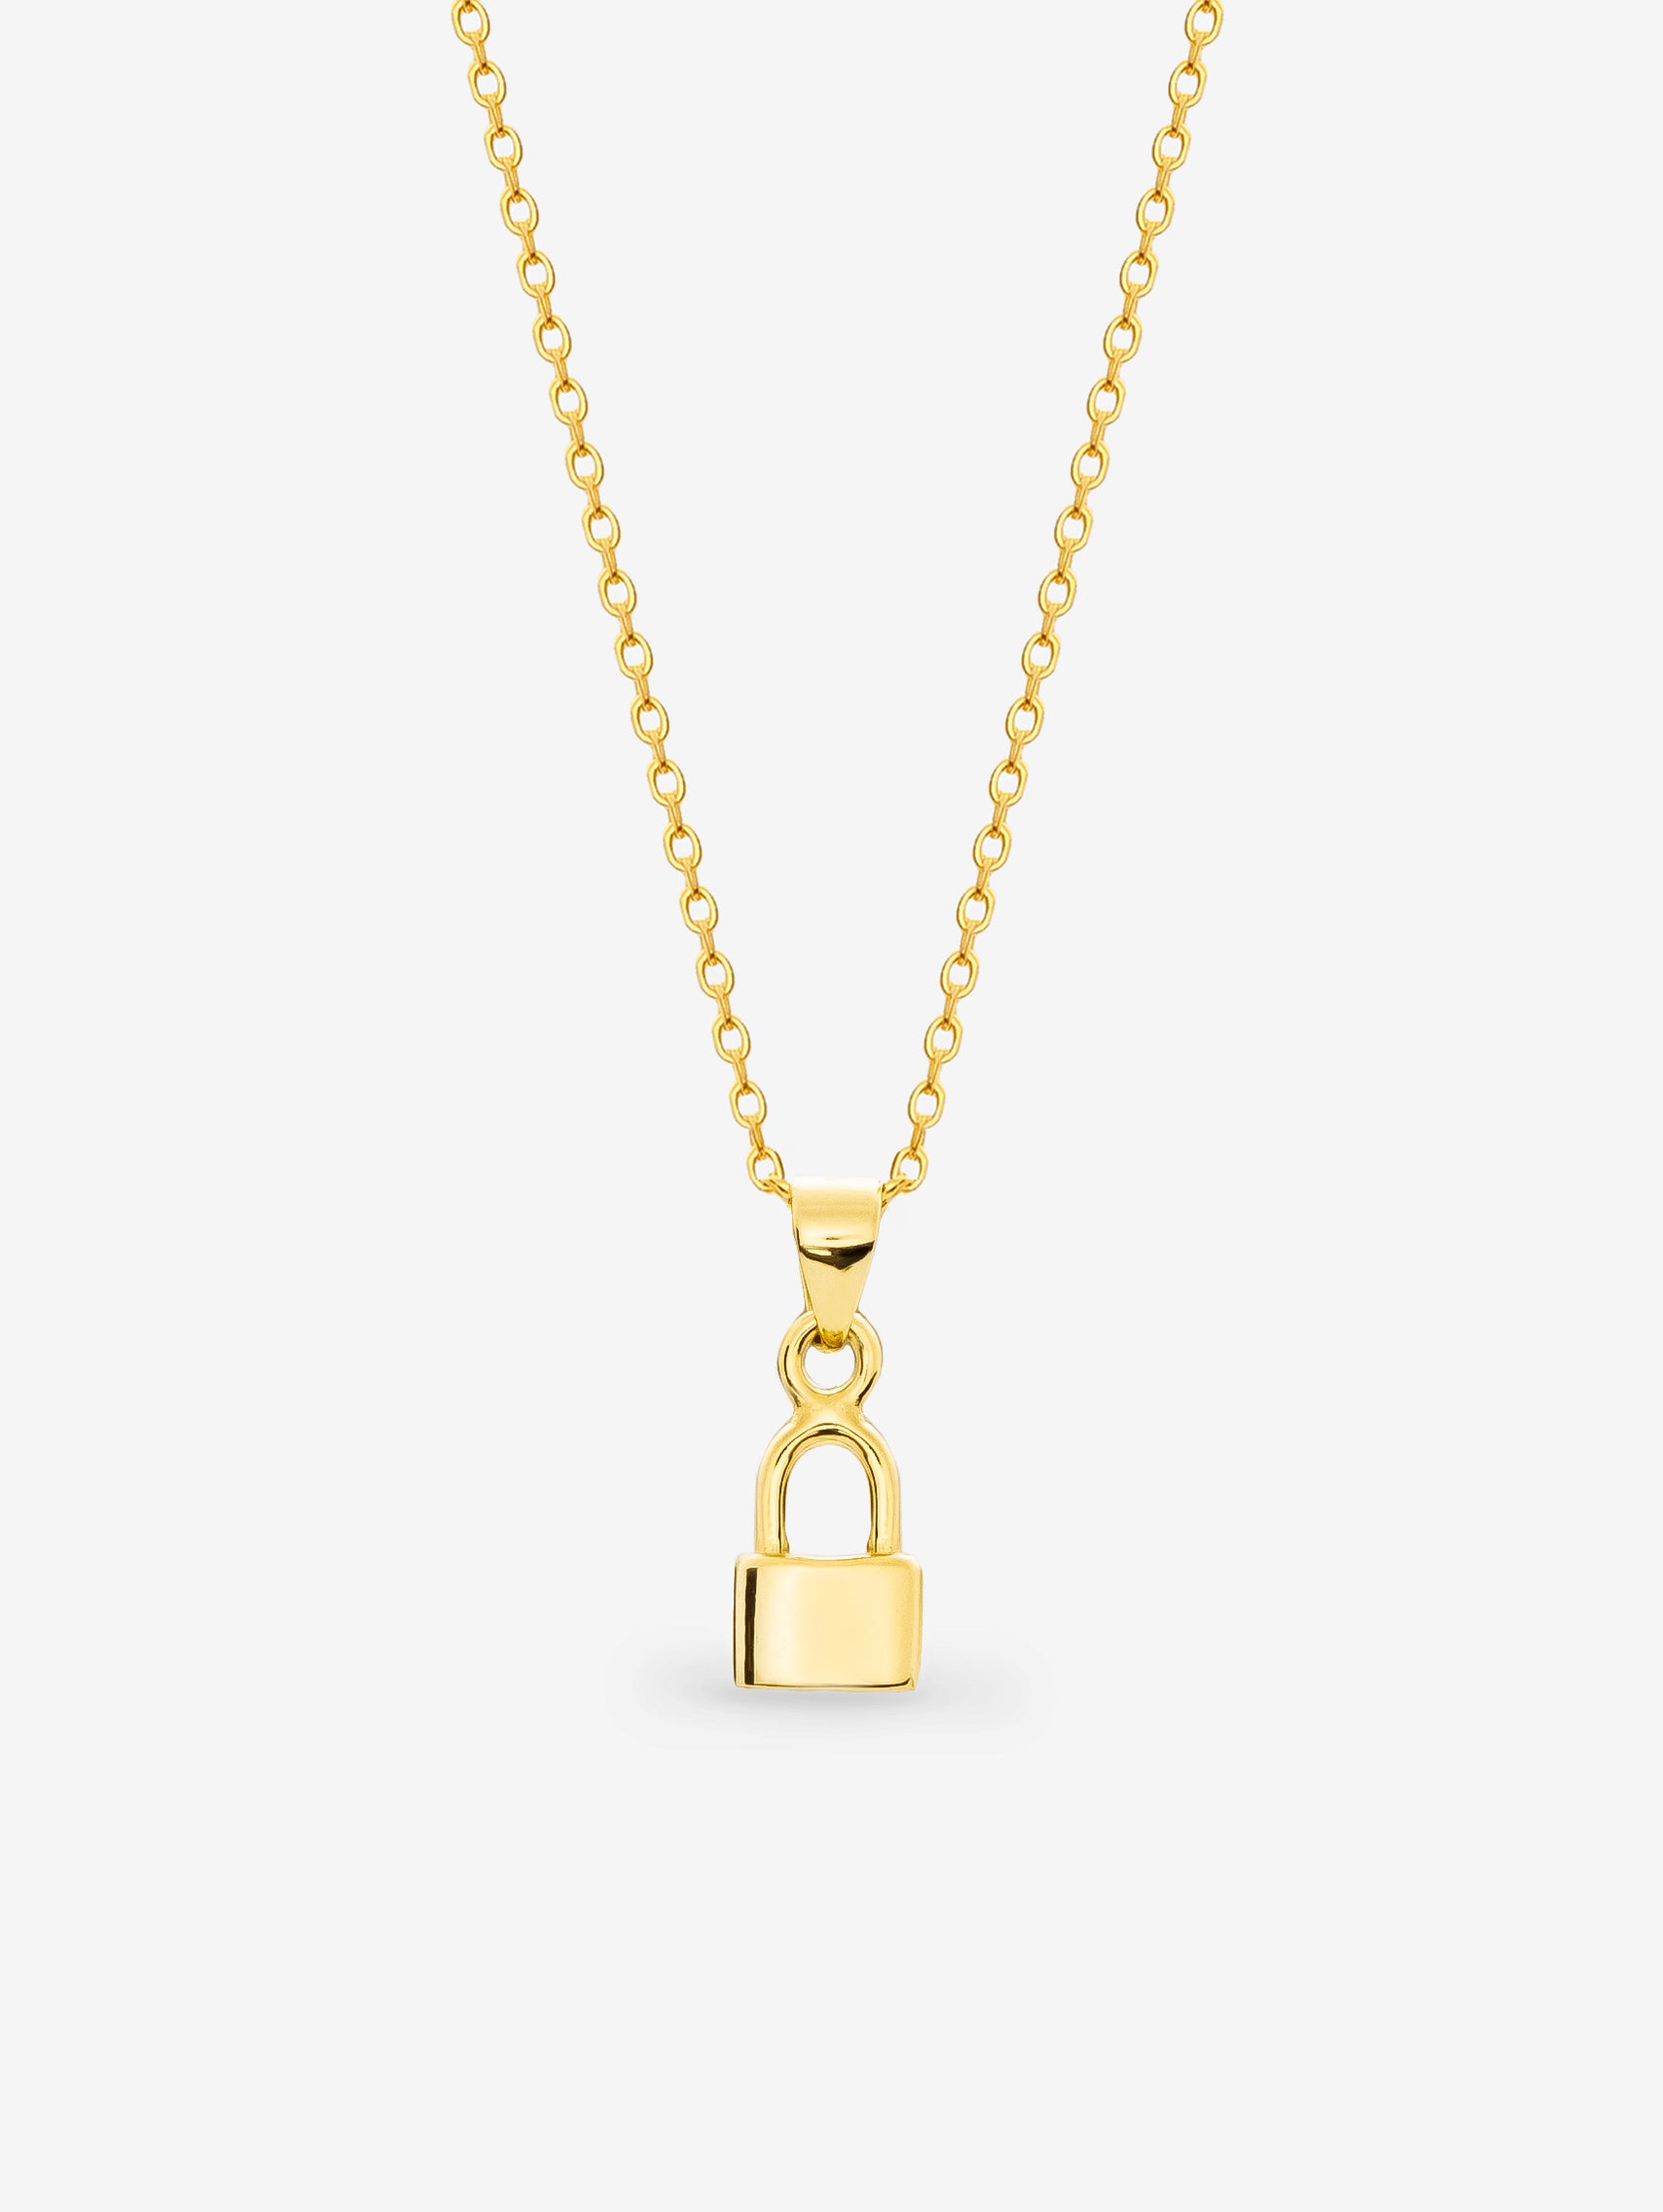 Gold Padlock Pendant Necklace / Choker - Adjustable Length